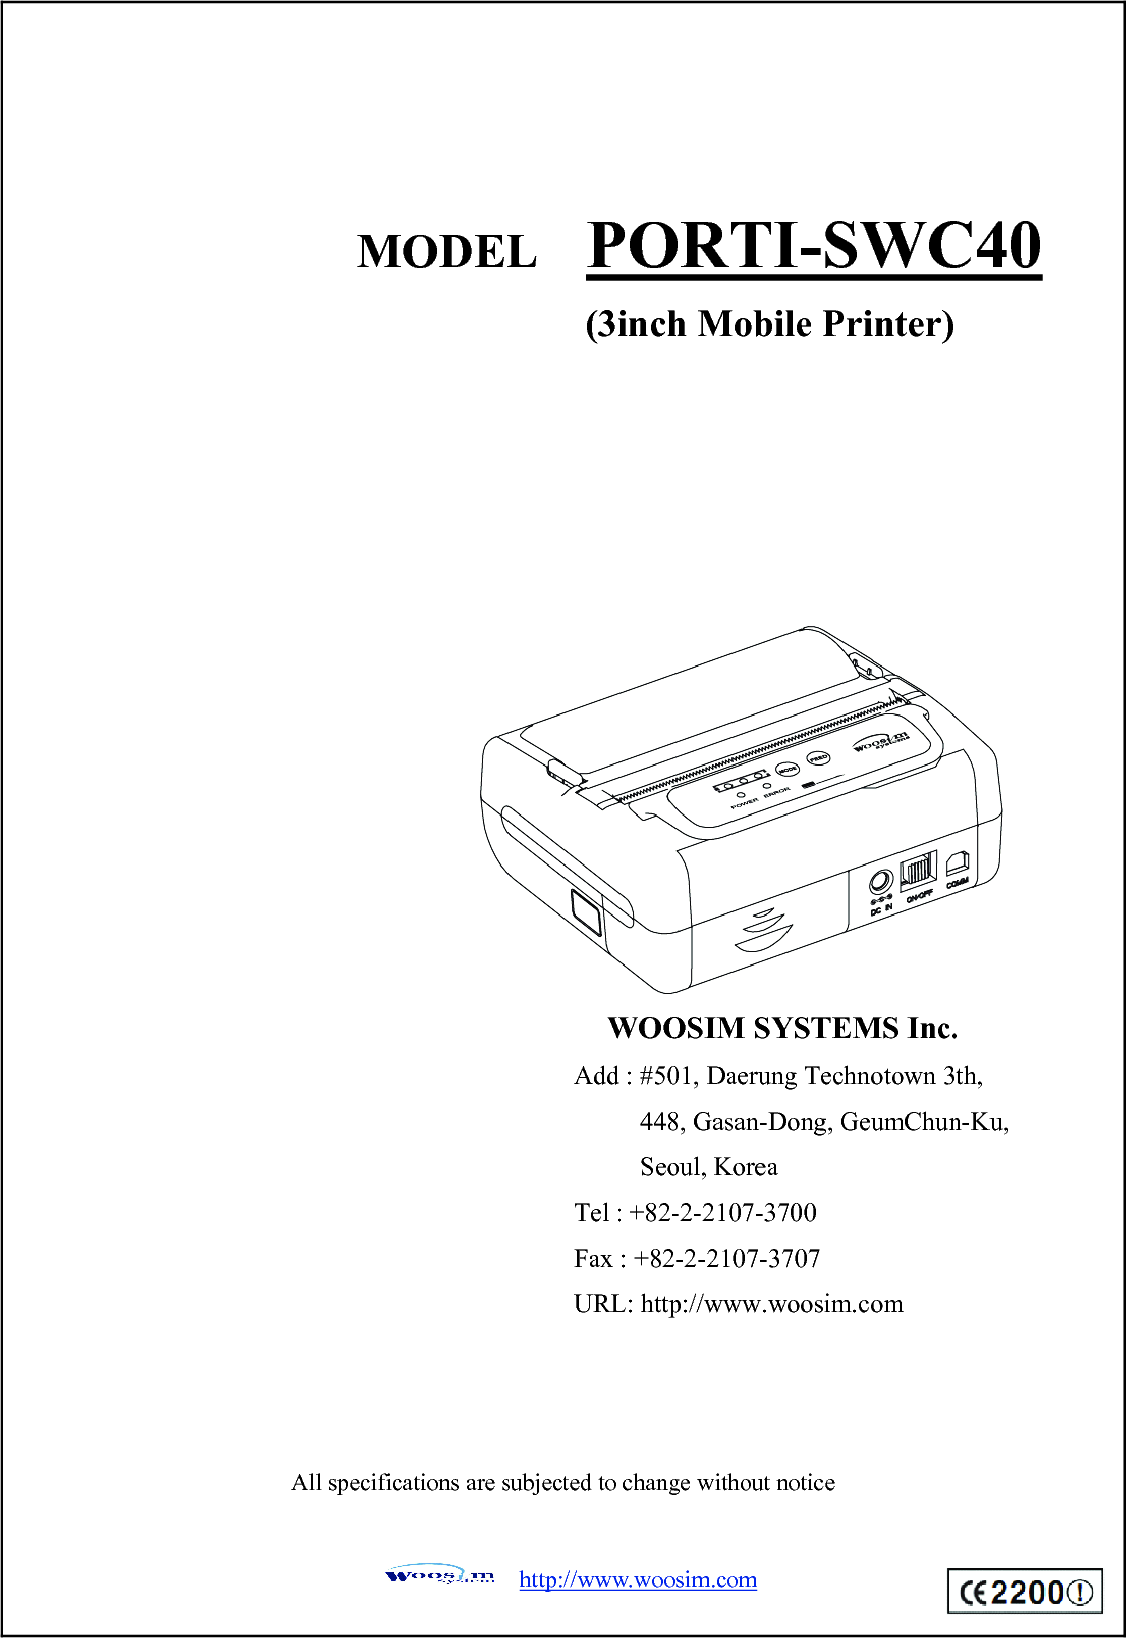  http://www.woosim.com                                 All specifications are subjected to change without notice MODEL  PORTI-SWC40 (3inch Mobile Printer) WOOSIM SYSTEMS Inc. Add : #501, Daerung Technotown 3th, 448, Gasan-Dong, GeumChun-Ku,   Seoul, Korea Tel : +82-2-2107-3700 Fax : +82-2-2107-3707 URL: http://www.woosim.com 